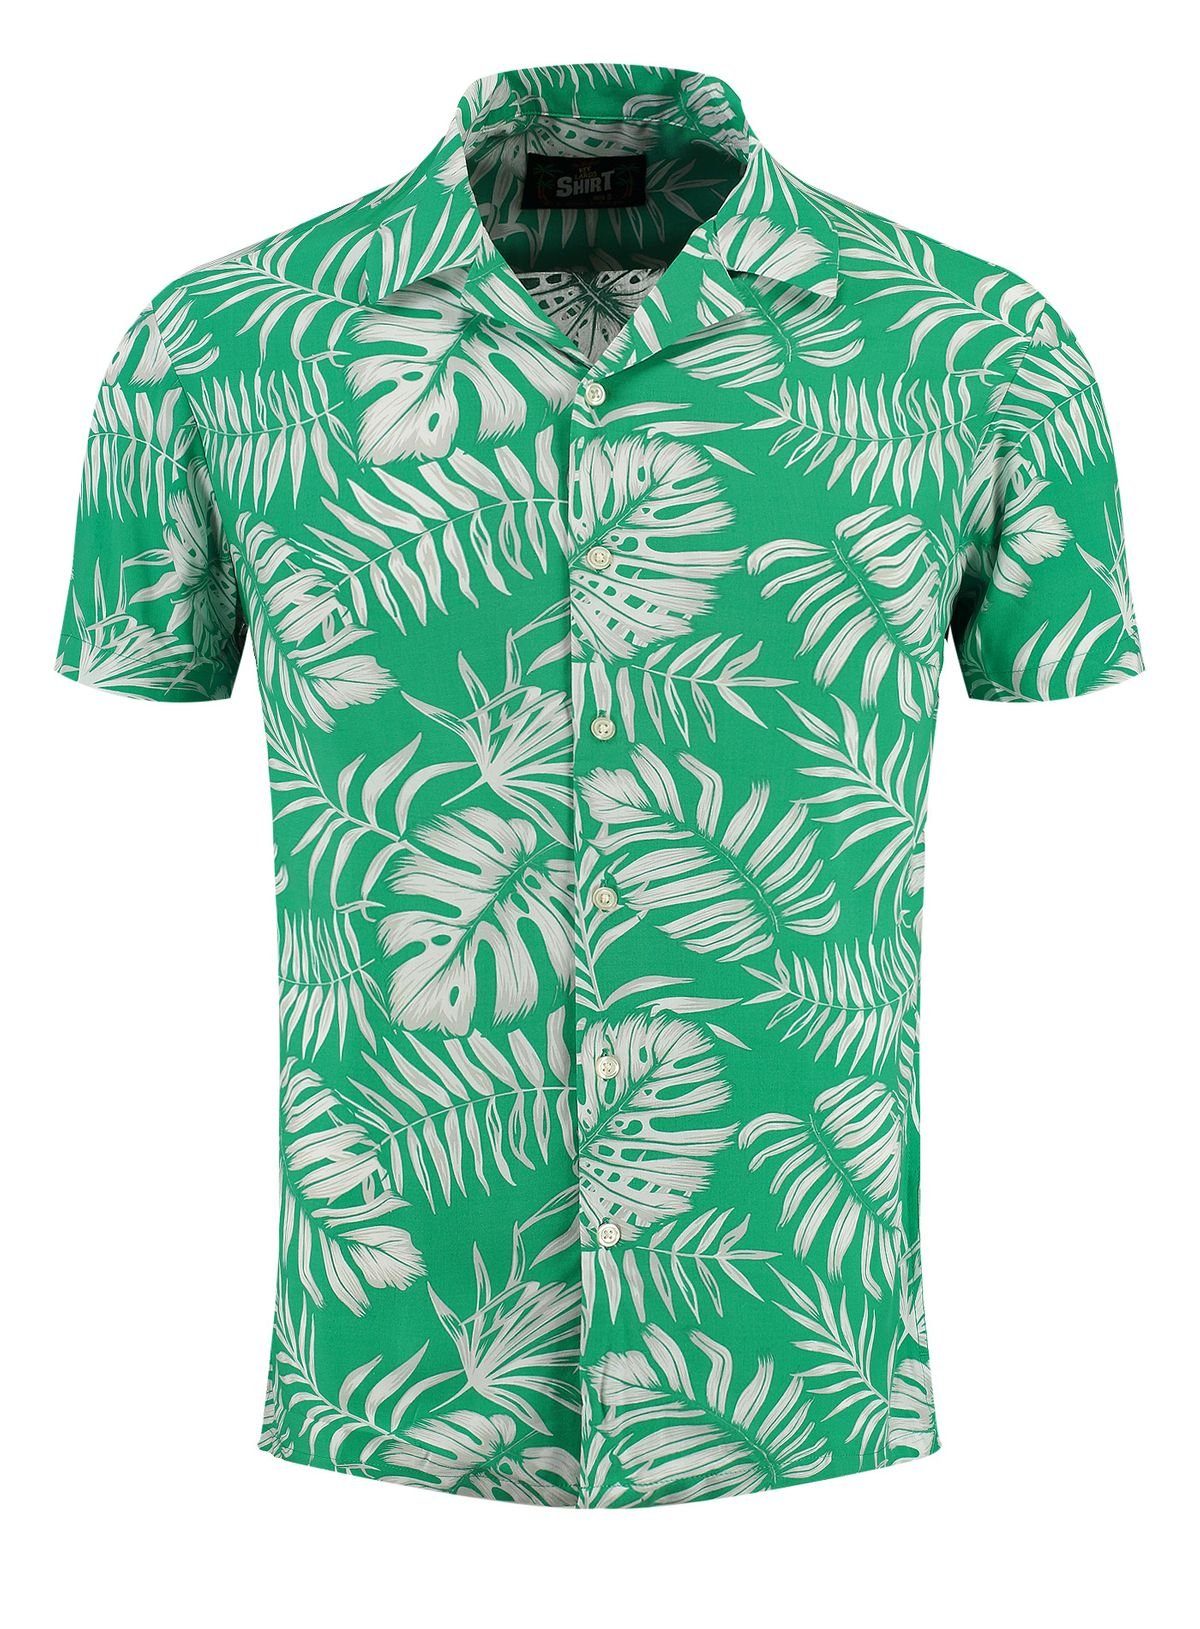 Key Largo Hawaiihemd Herren Hawaii Freizeit Hemd Havanna MSH00009 Regular Kurzarm Kentkragen Gemustert